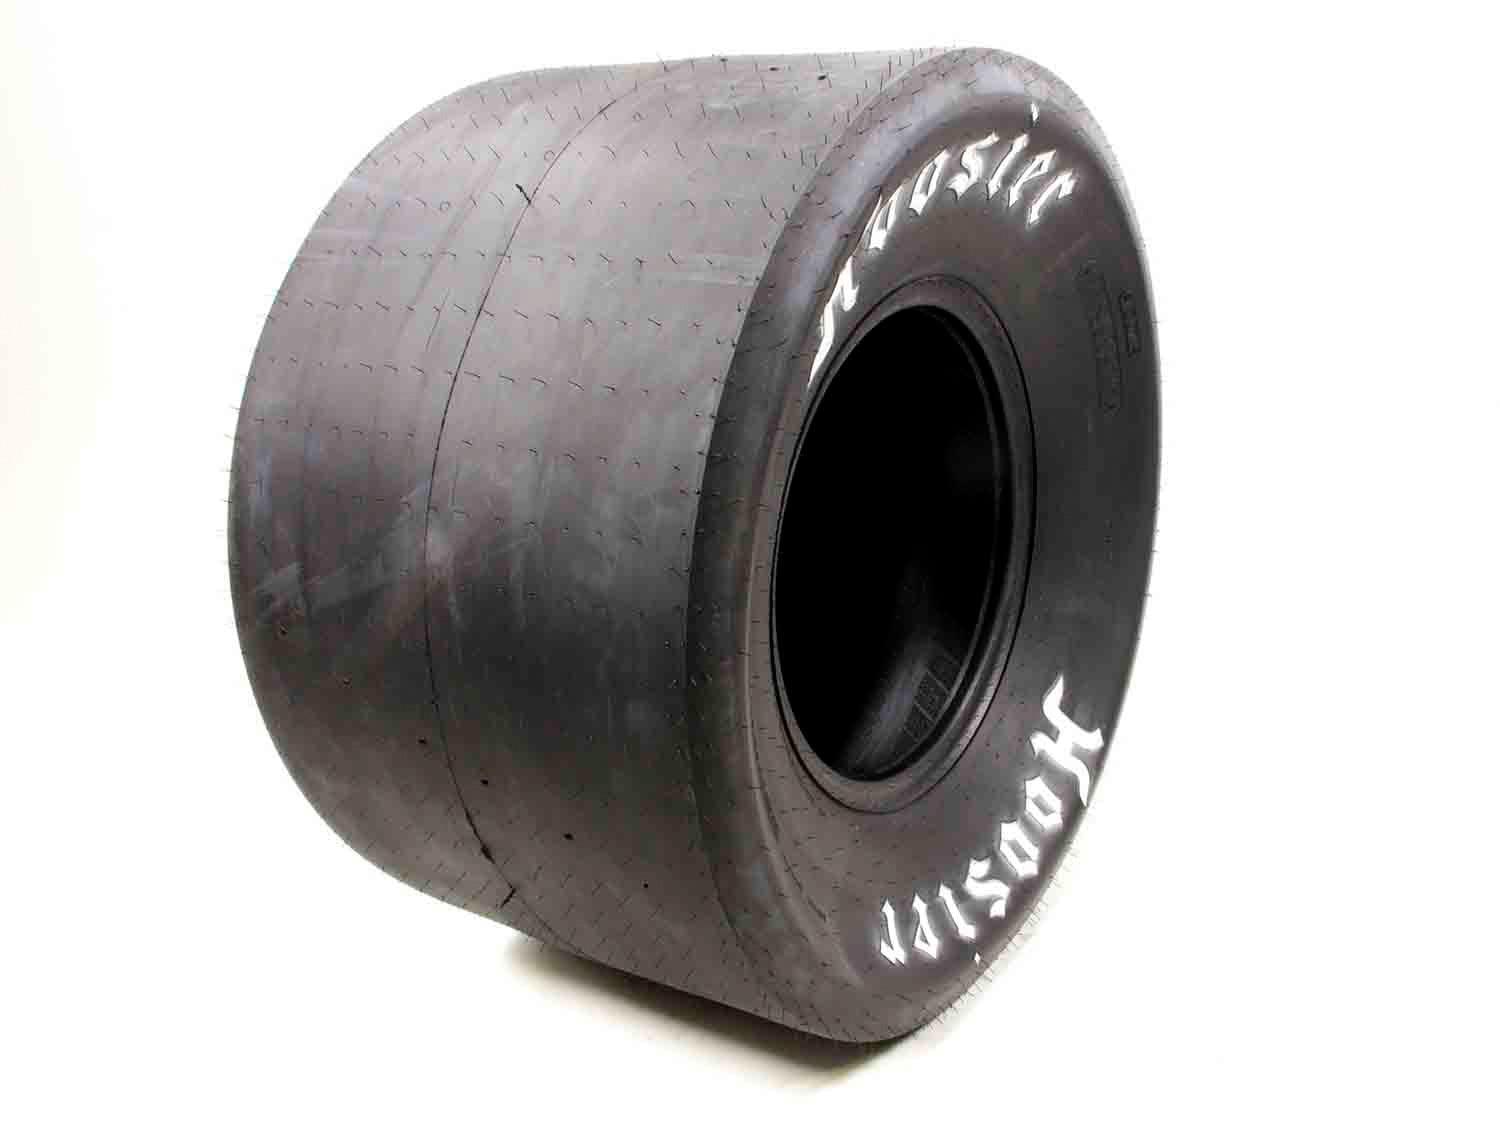 33.0/15-15 Drag Tire - Burlile Performance Products